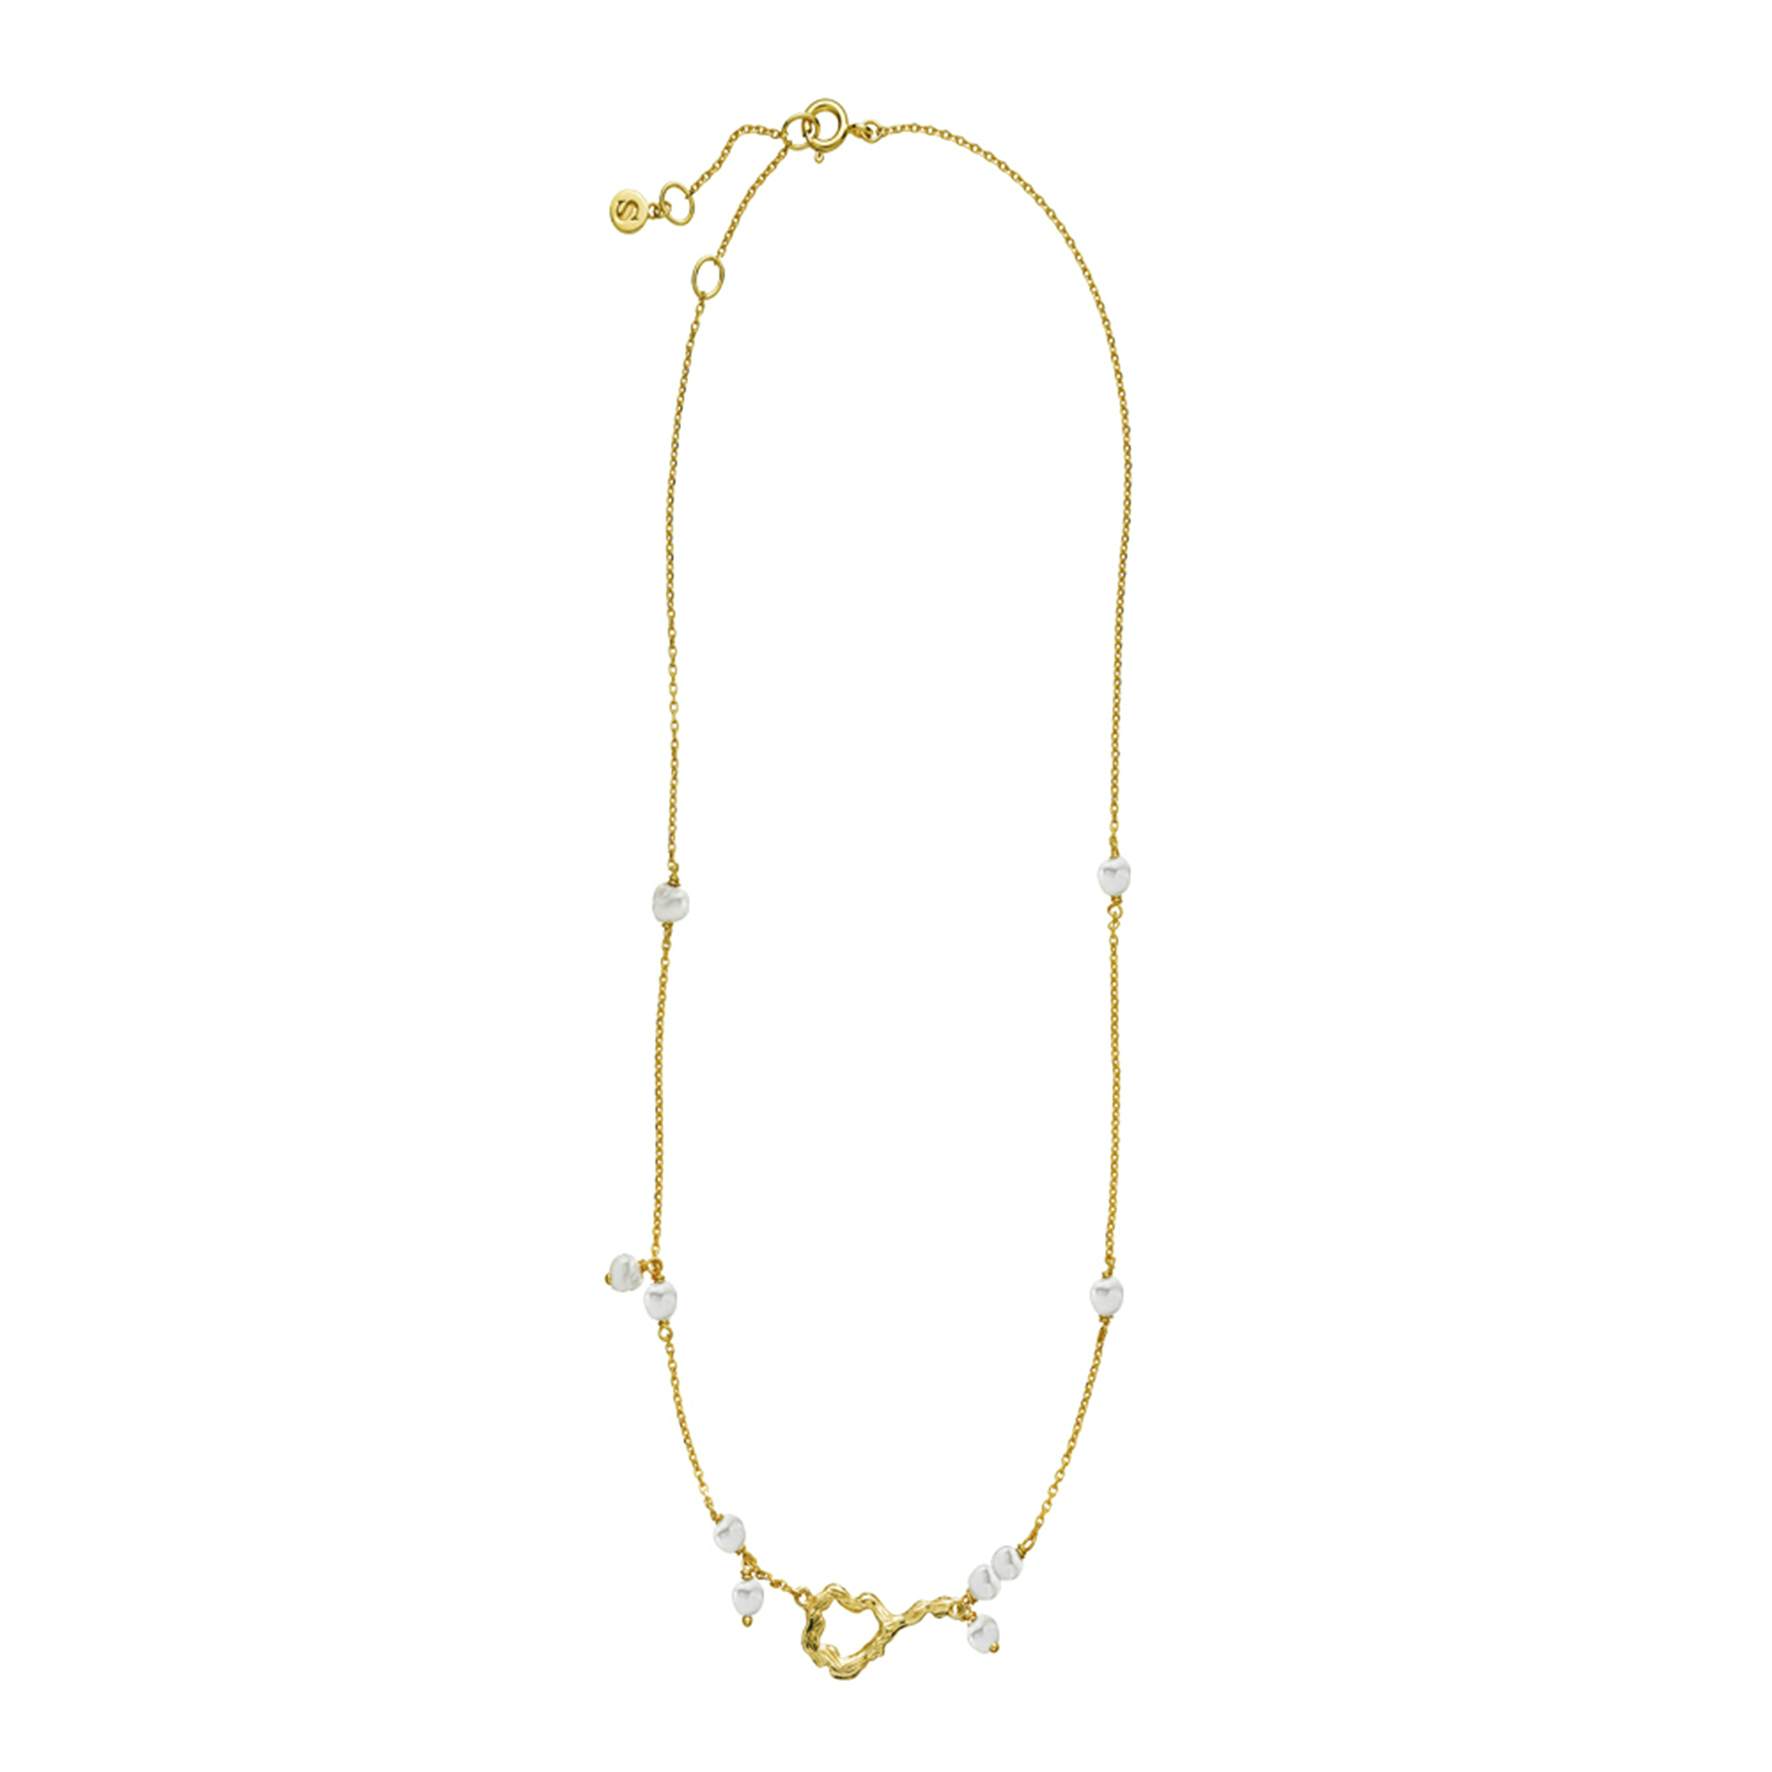 Lærke Bentsen By Sistie Necklace With Pearls fra Sistie i Forgylt-Sølv Sterling 925|Freshwater Pearl